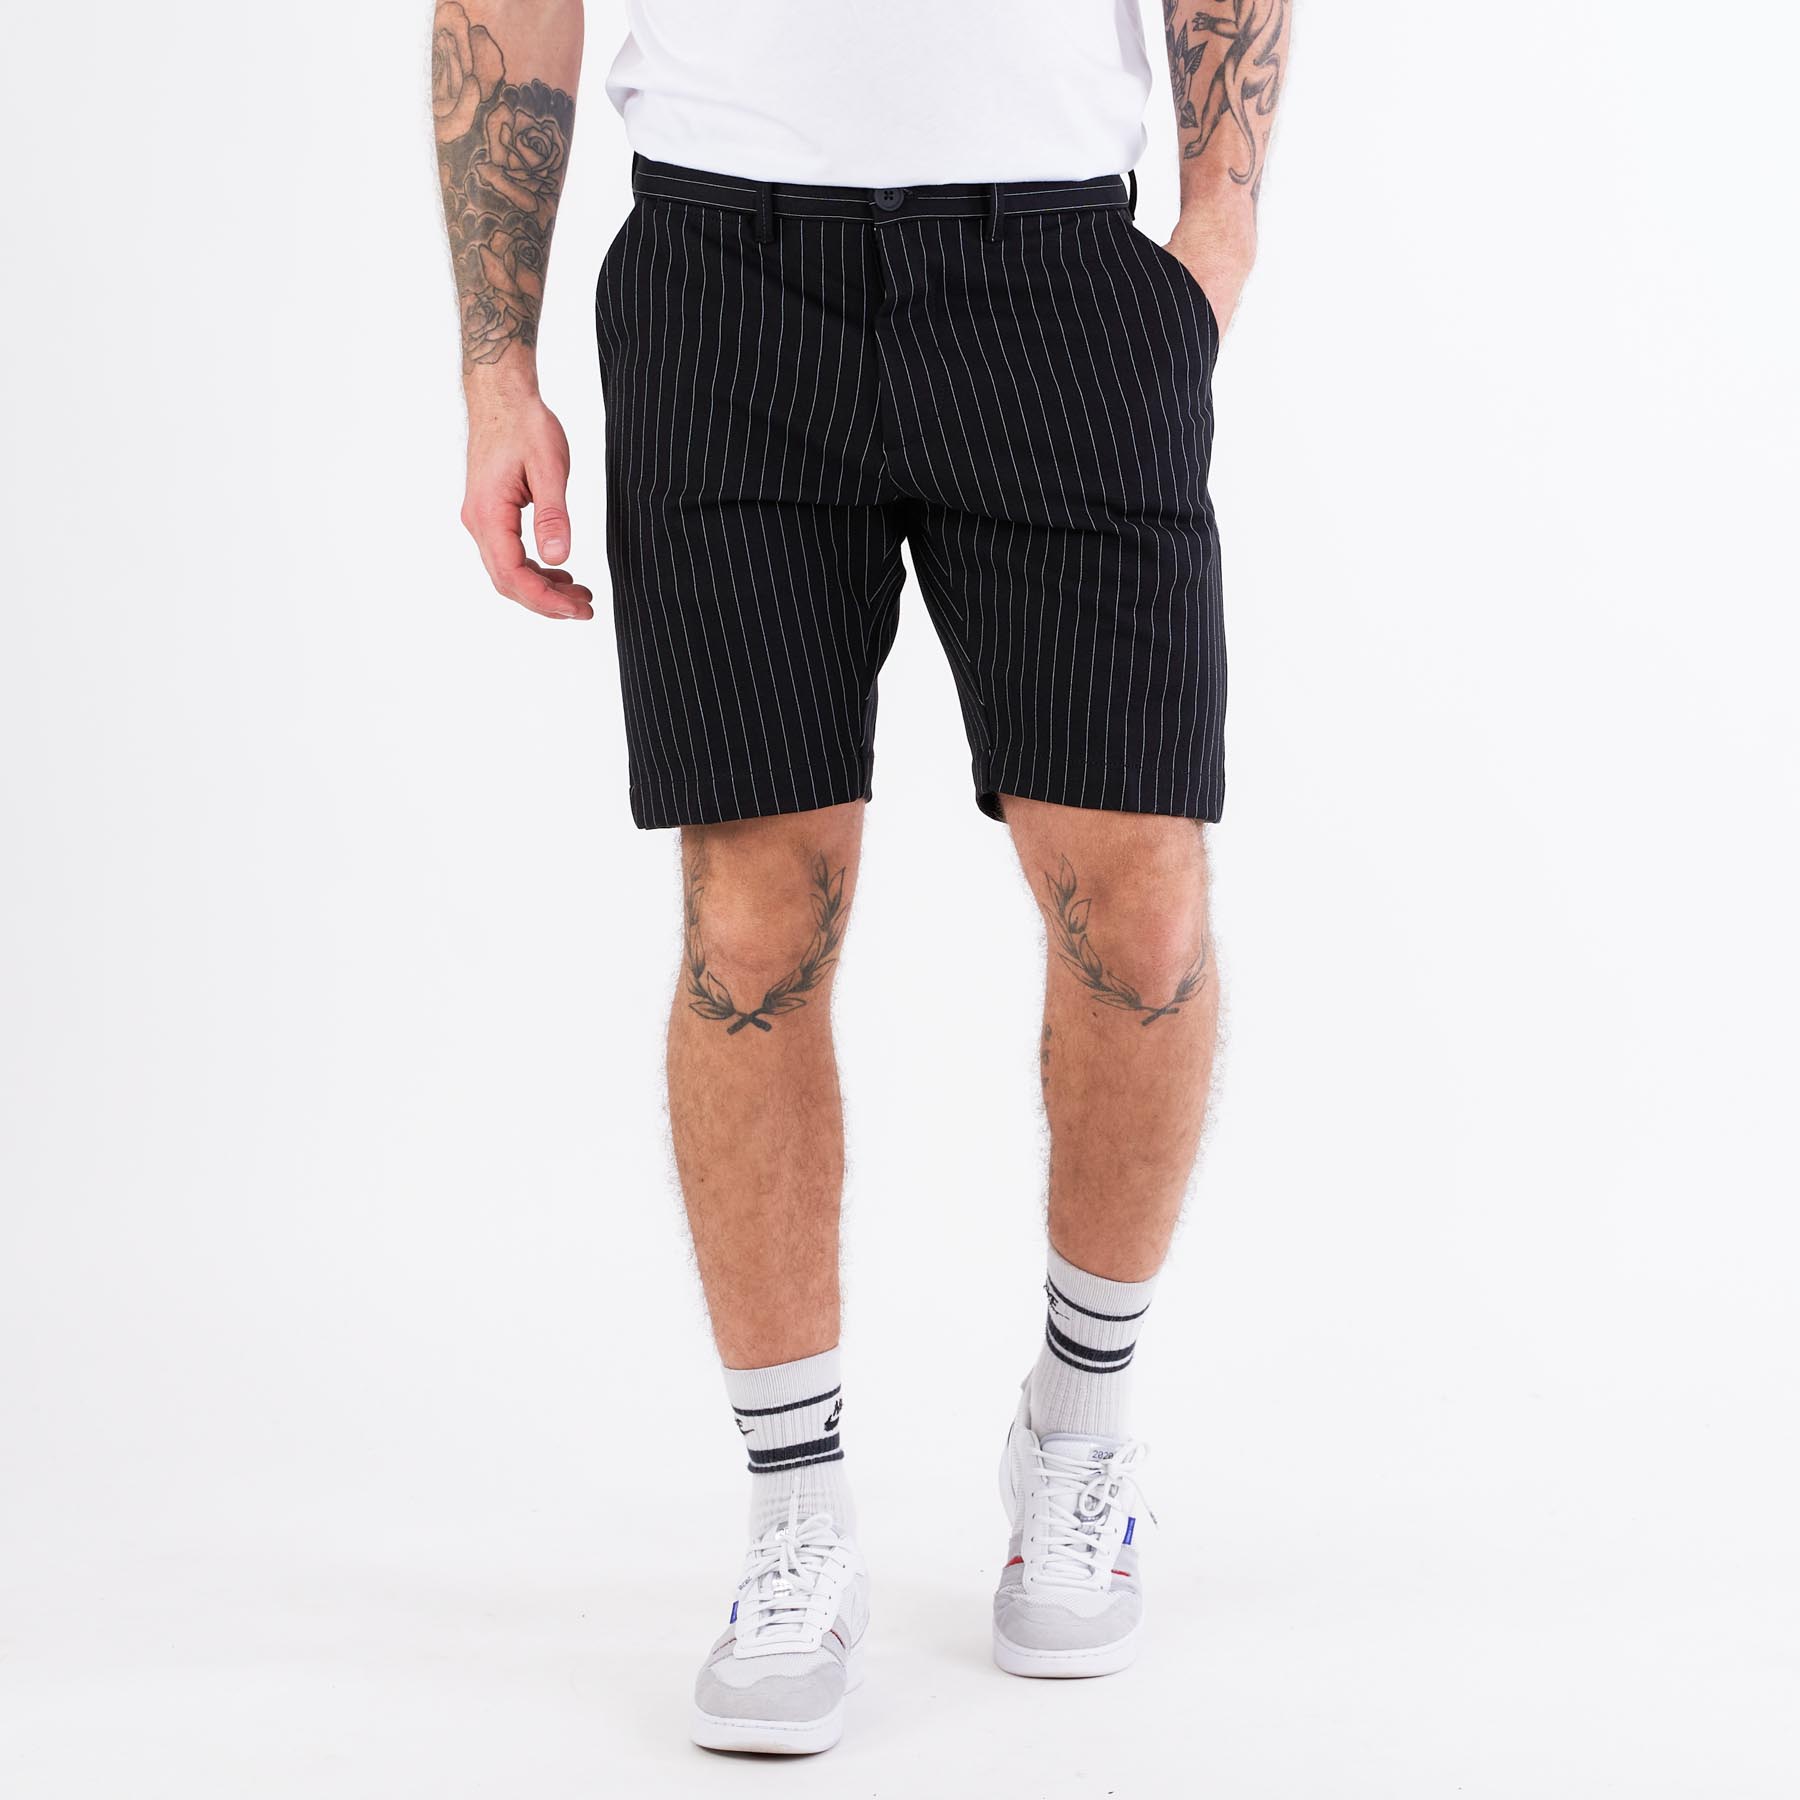 Noreligion - Comfort stretch shorts - Herreshorts - F/BLACK PIN - L